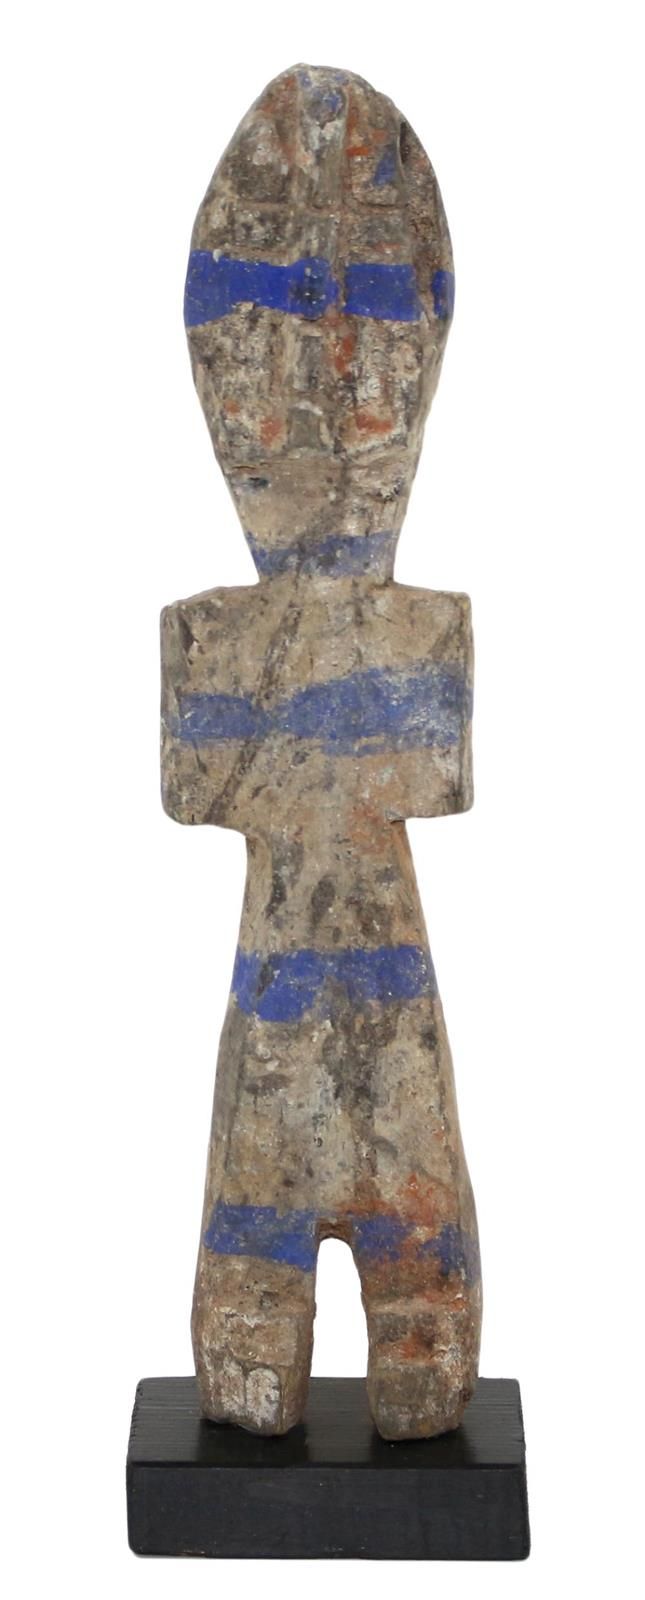 Ada Geistfigur, Ritual figure of Ada Ghana. Standing figure with ovoid head, str&hellip;